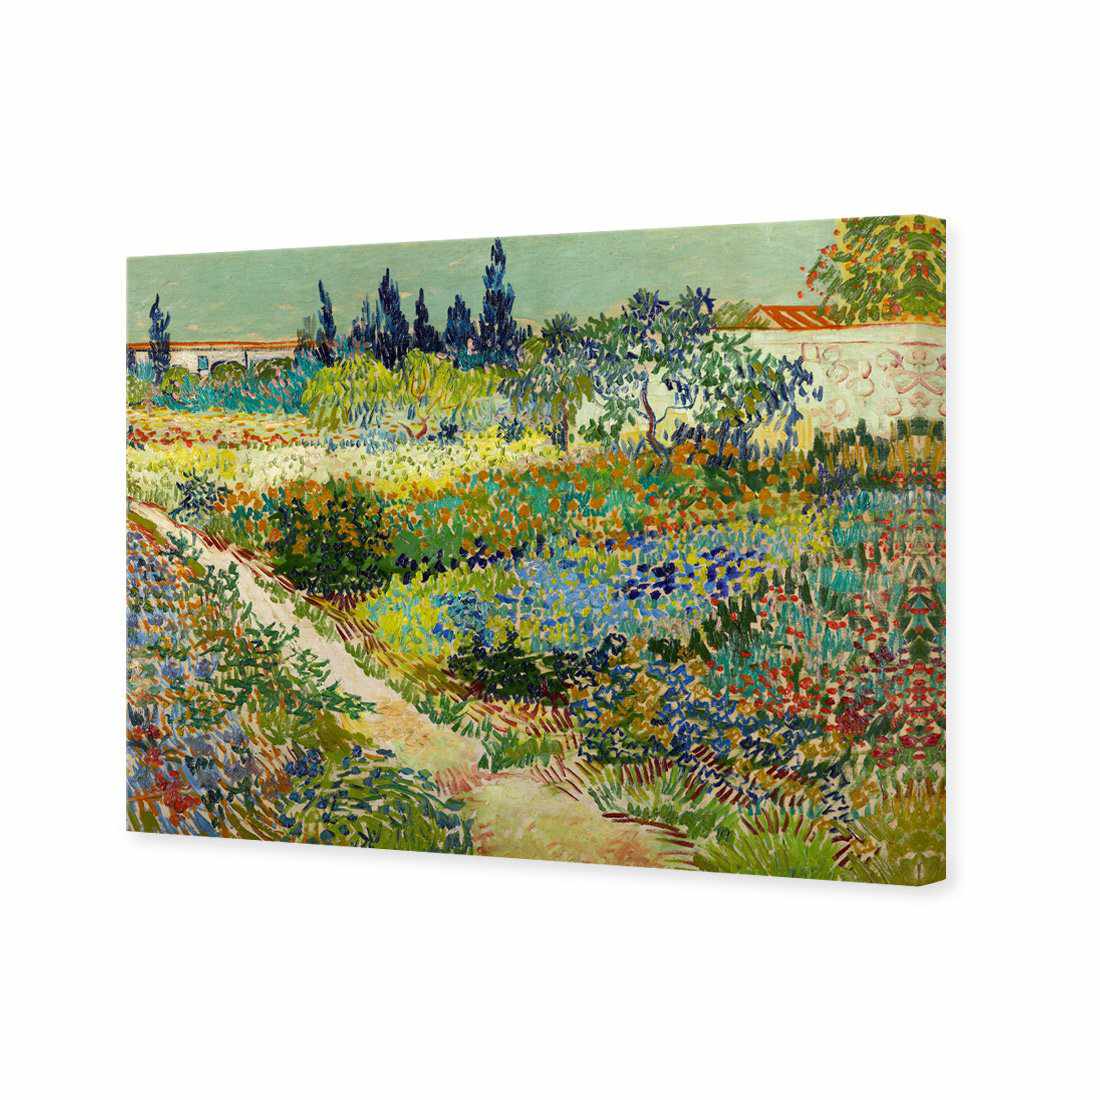 Garden At Arles - Van Gogh Canvas Art-Canvas-Wall Art Designs-45x30cm-Canvas - No Frame-Wall Art Designs